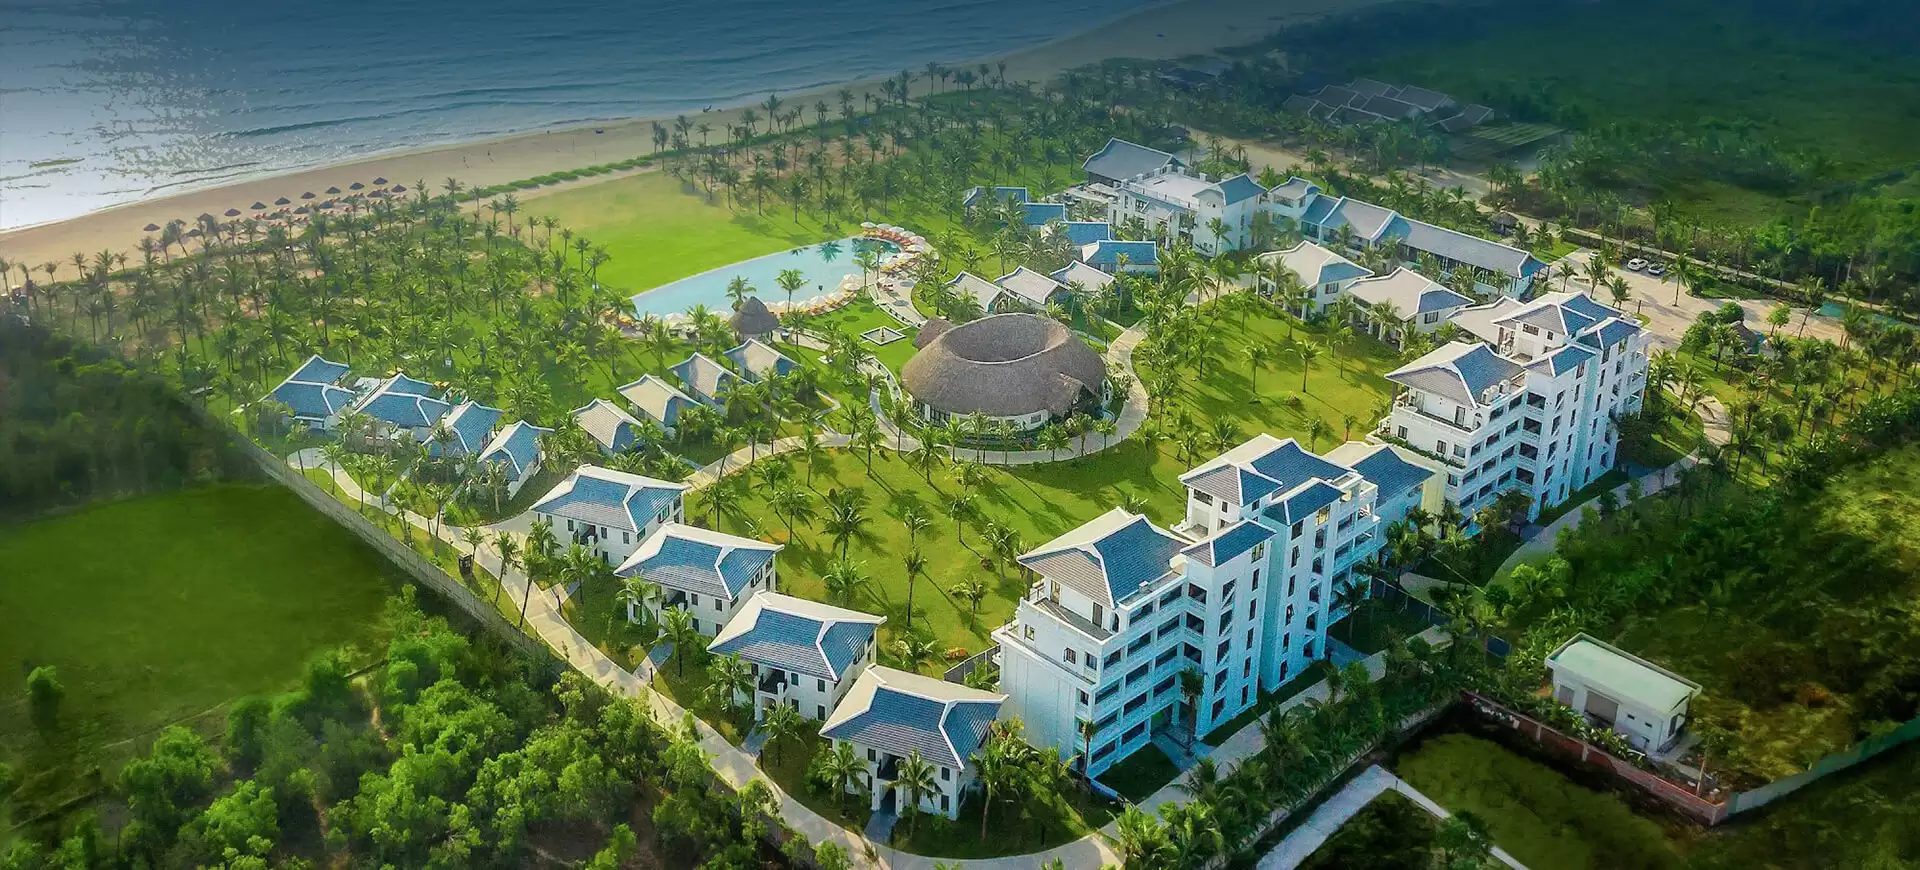 An Ideal Resort in Central Vietnam for a Vietnam Journey